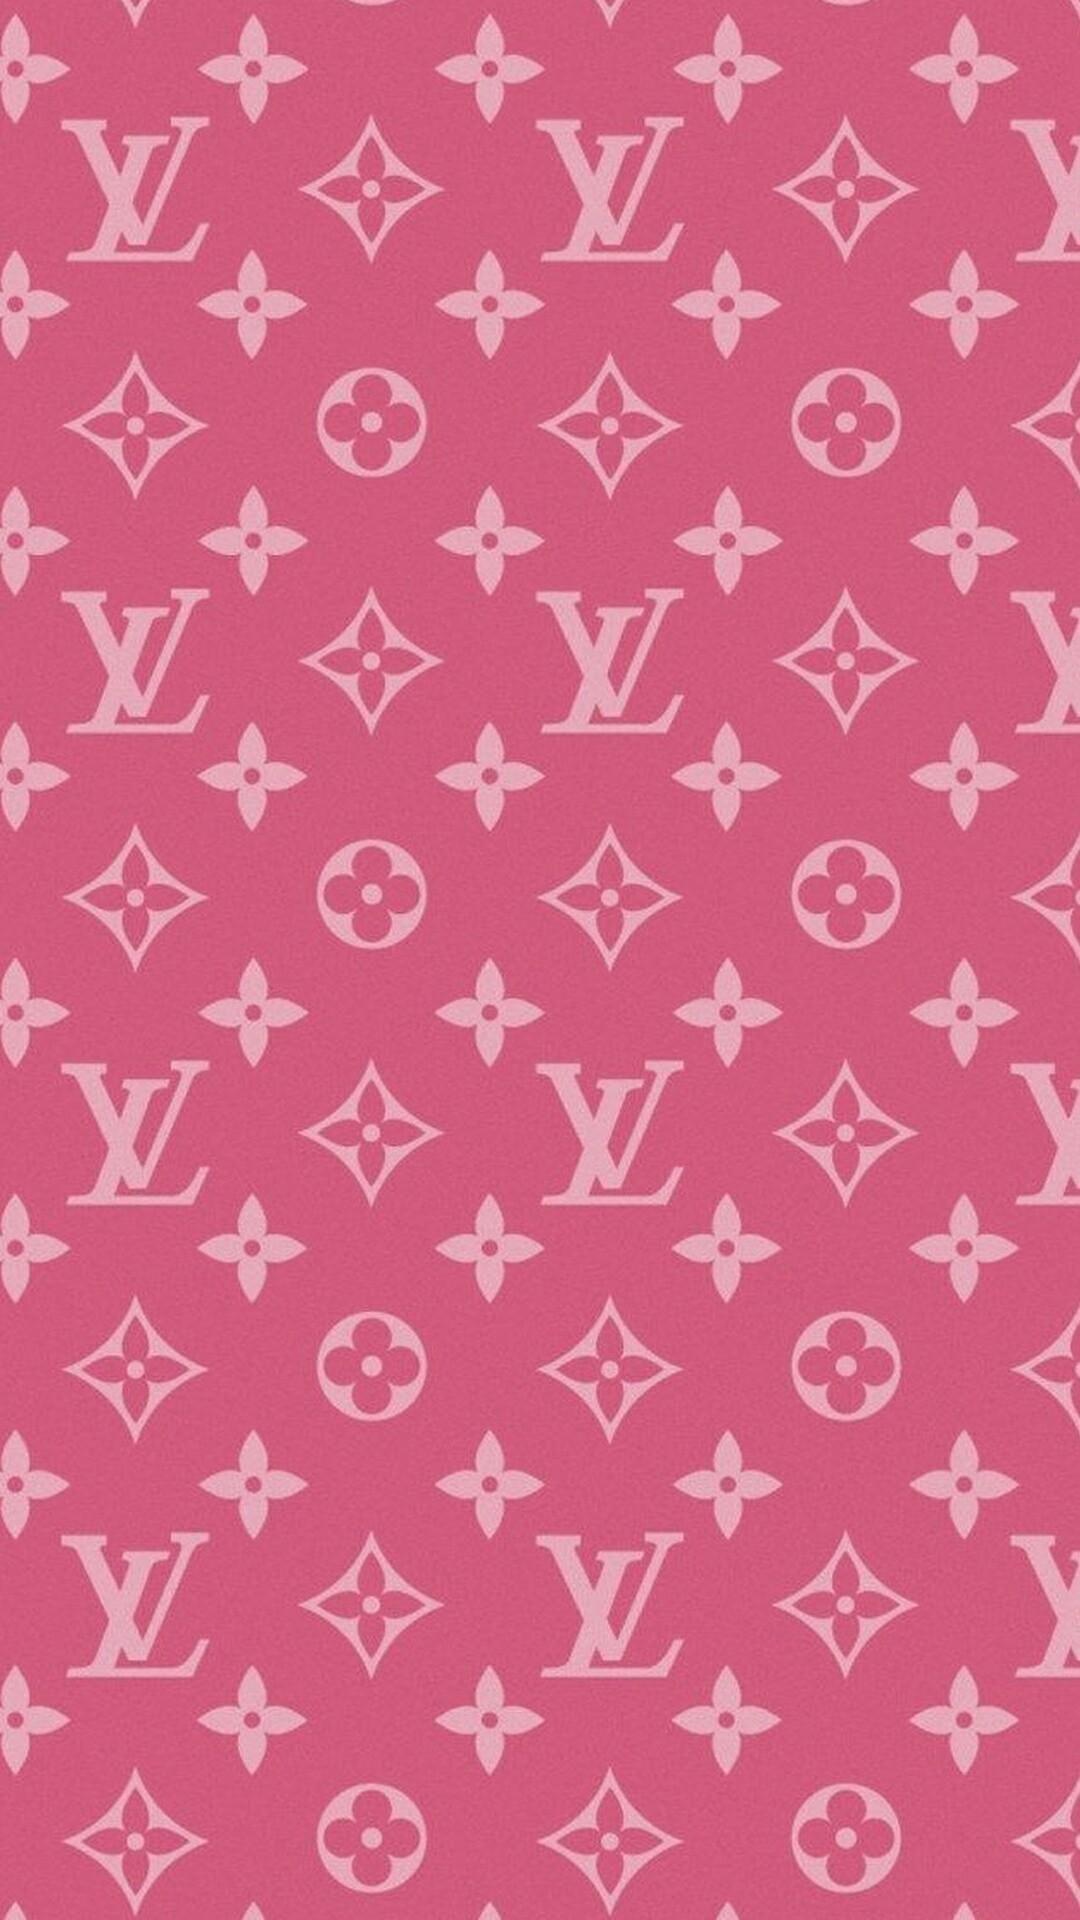 Free download LOUIS VUITTON Wallpaper Hype wallpaper Pretty wallpapers  [600x1200] for your Desktop, Mobile & Tablet, Explore 26+ Louis Vuitton  Phone Wallpapers